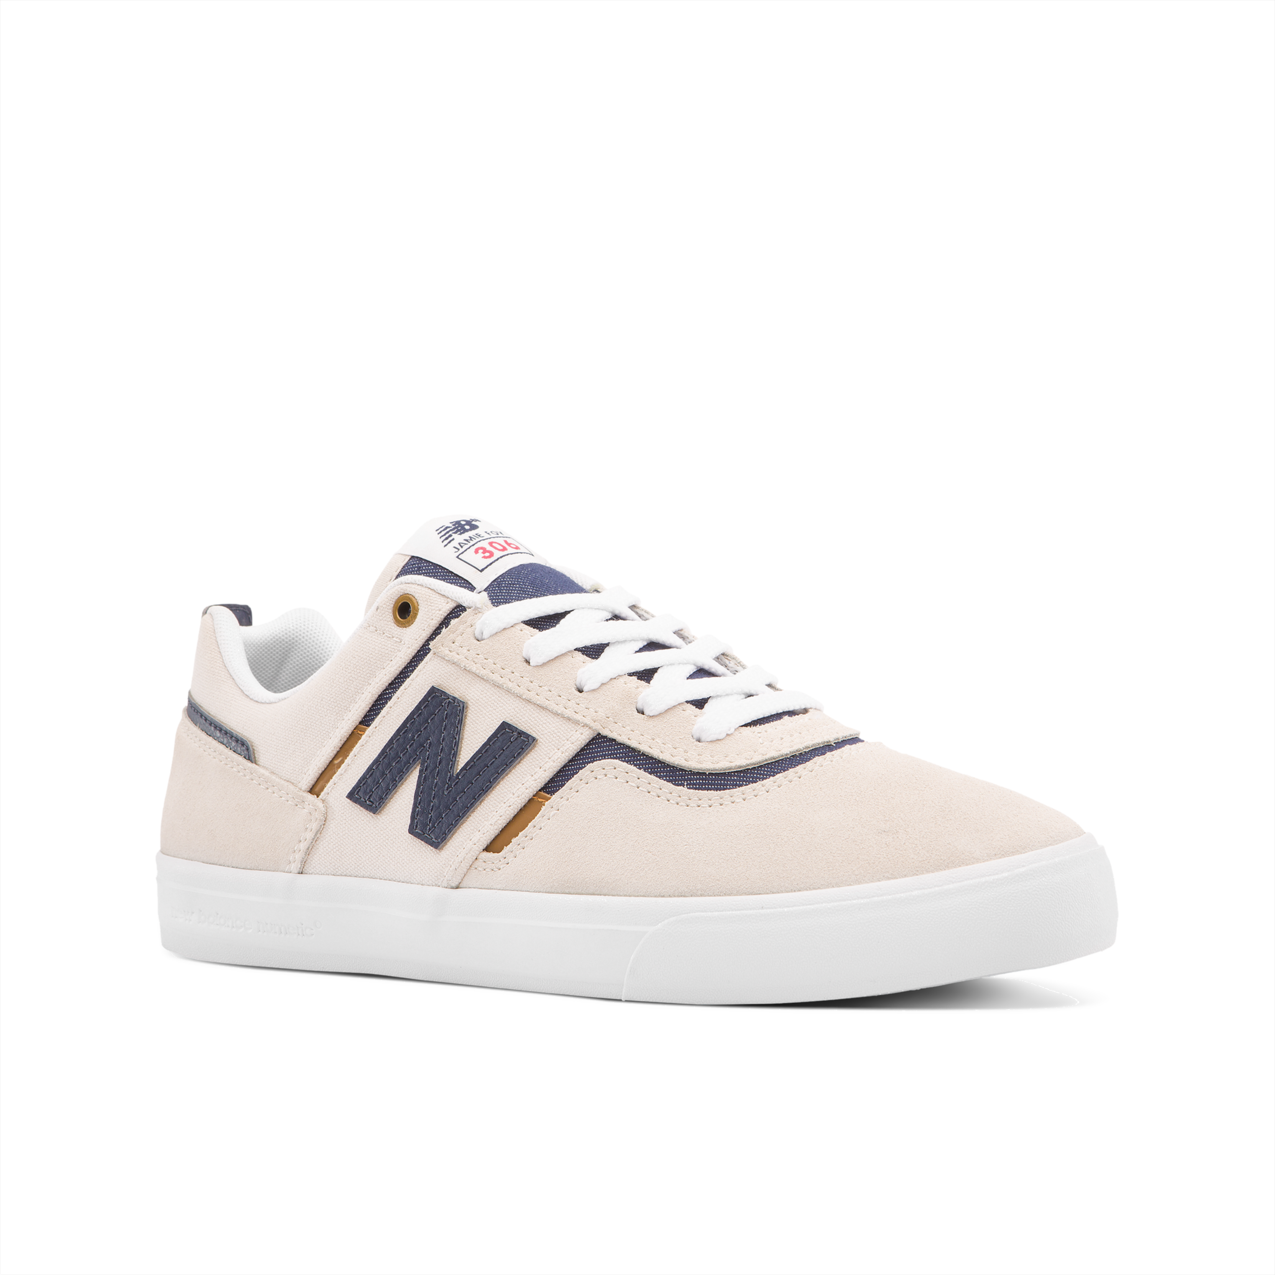 New Balance Numeric Men's Jamie Foy 306 White Navy Shoes